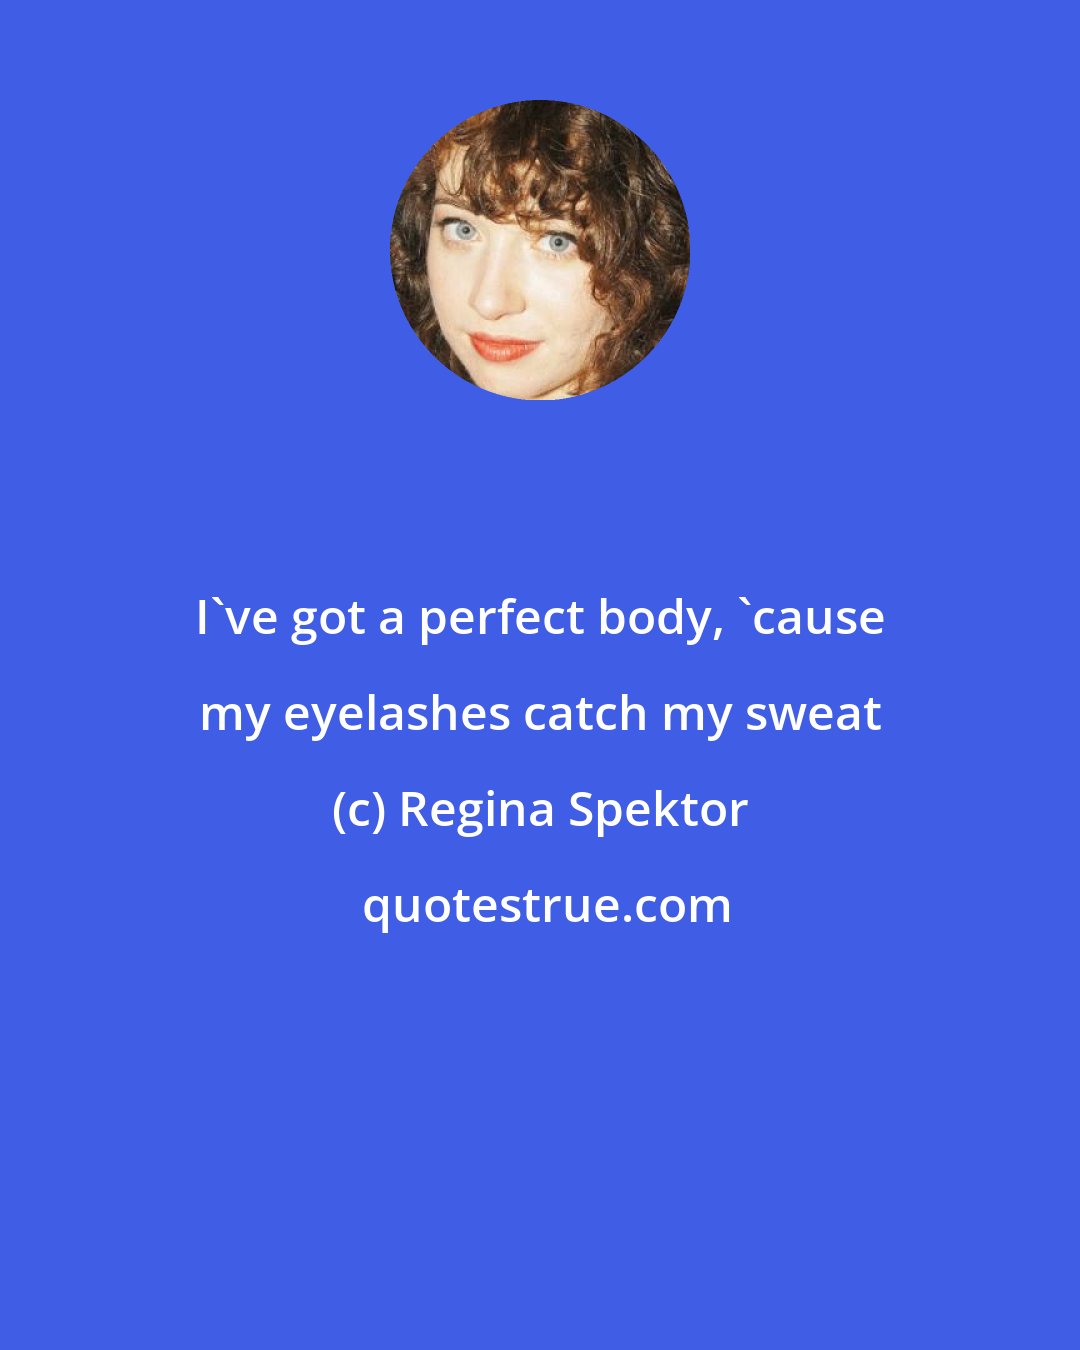 Regina Spektor: I've got a perfect body, 'cause my eyelashes catch my sweat